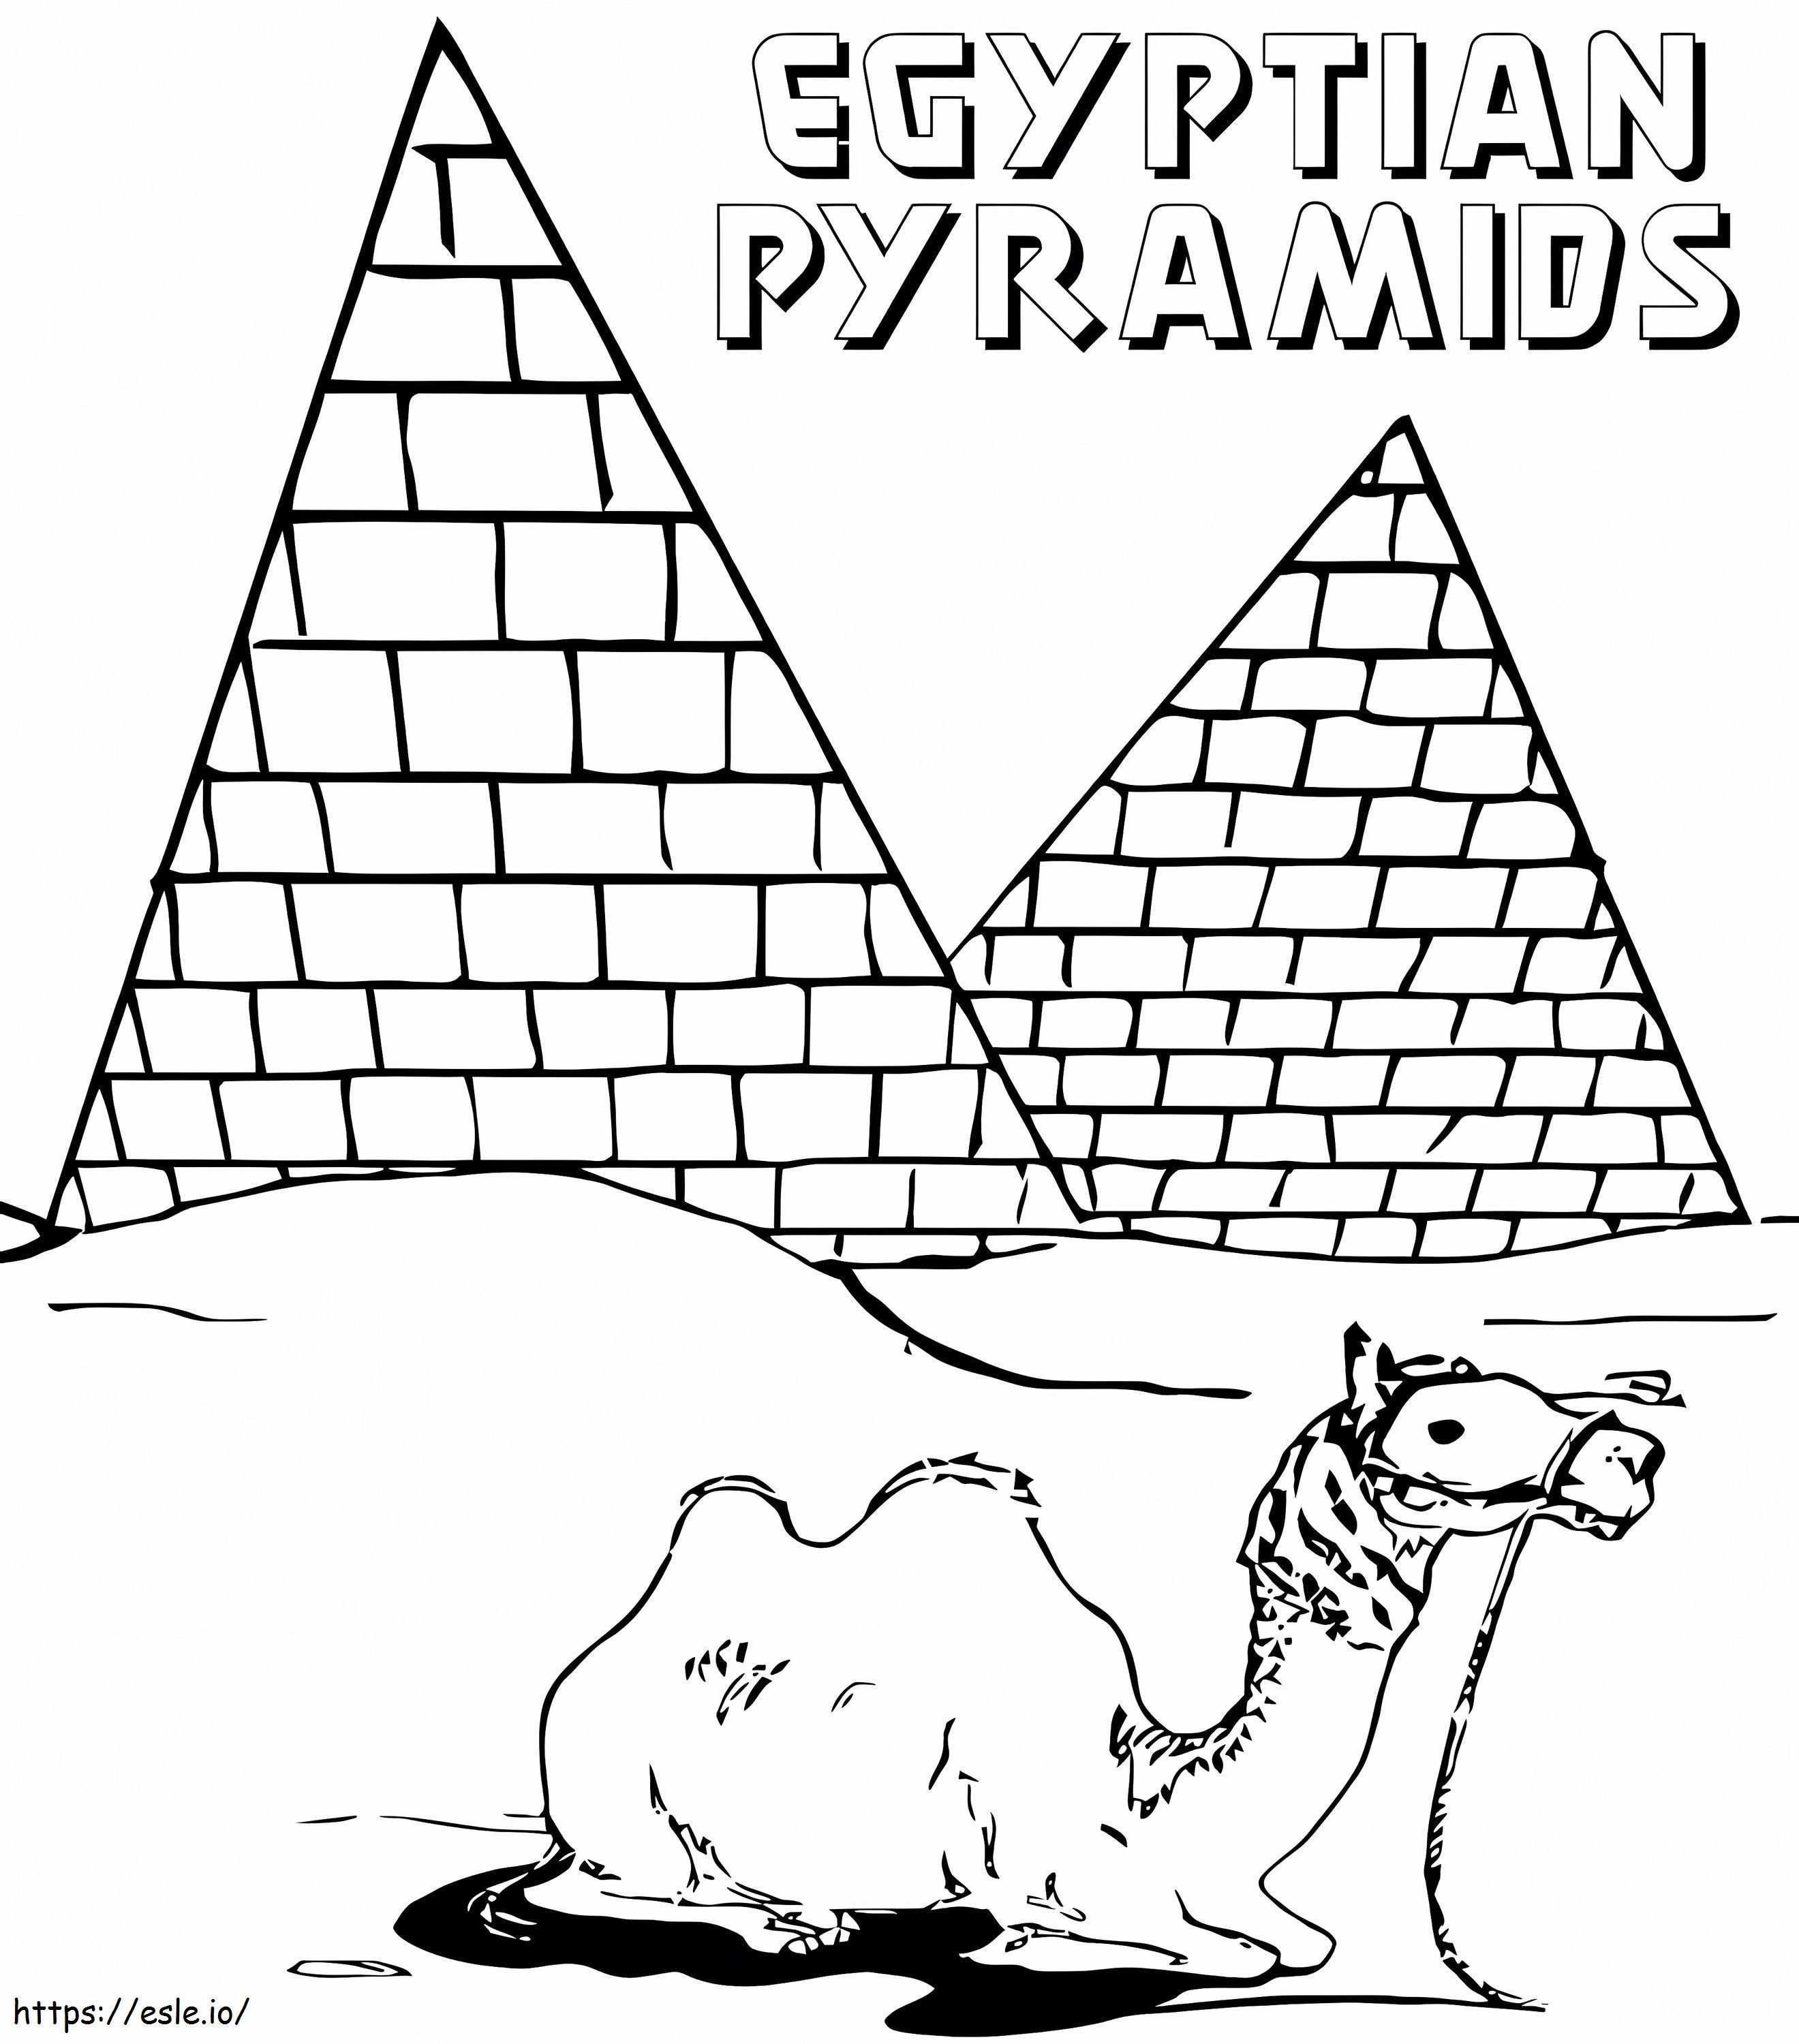 Egyptian Piramids coloring page